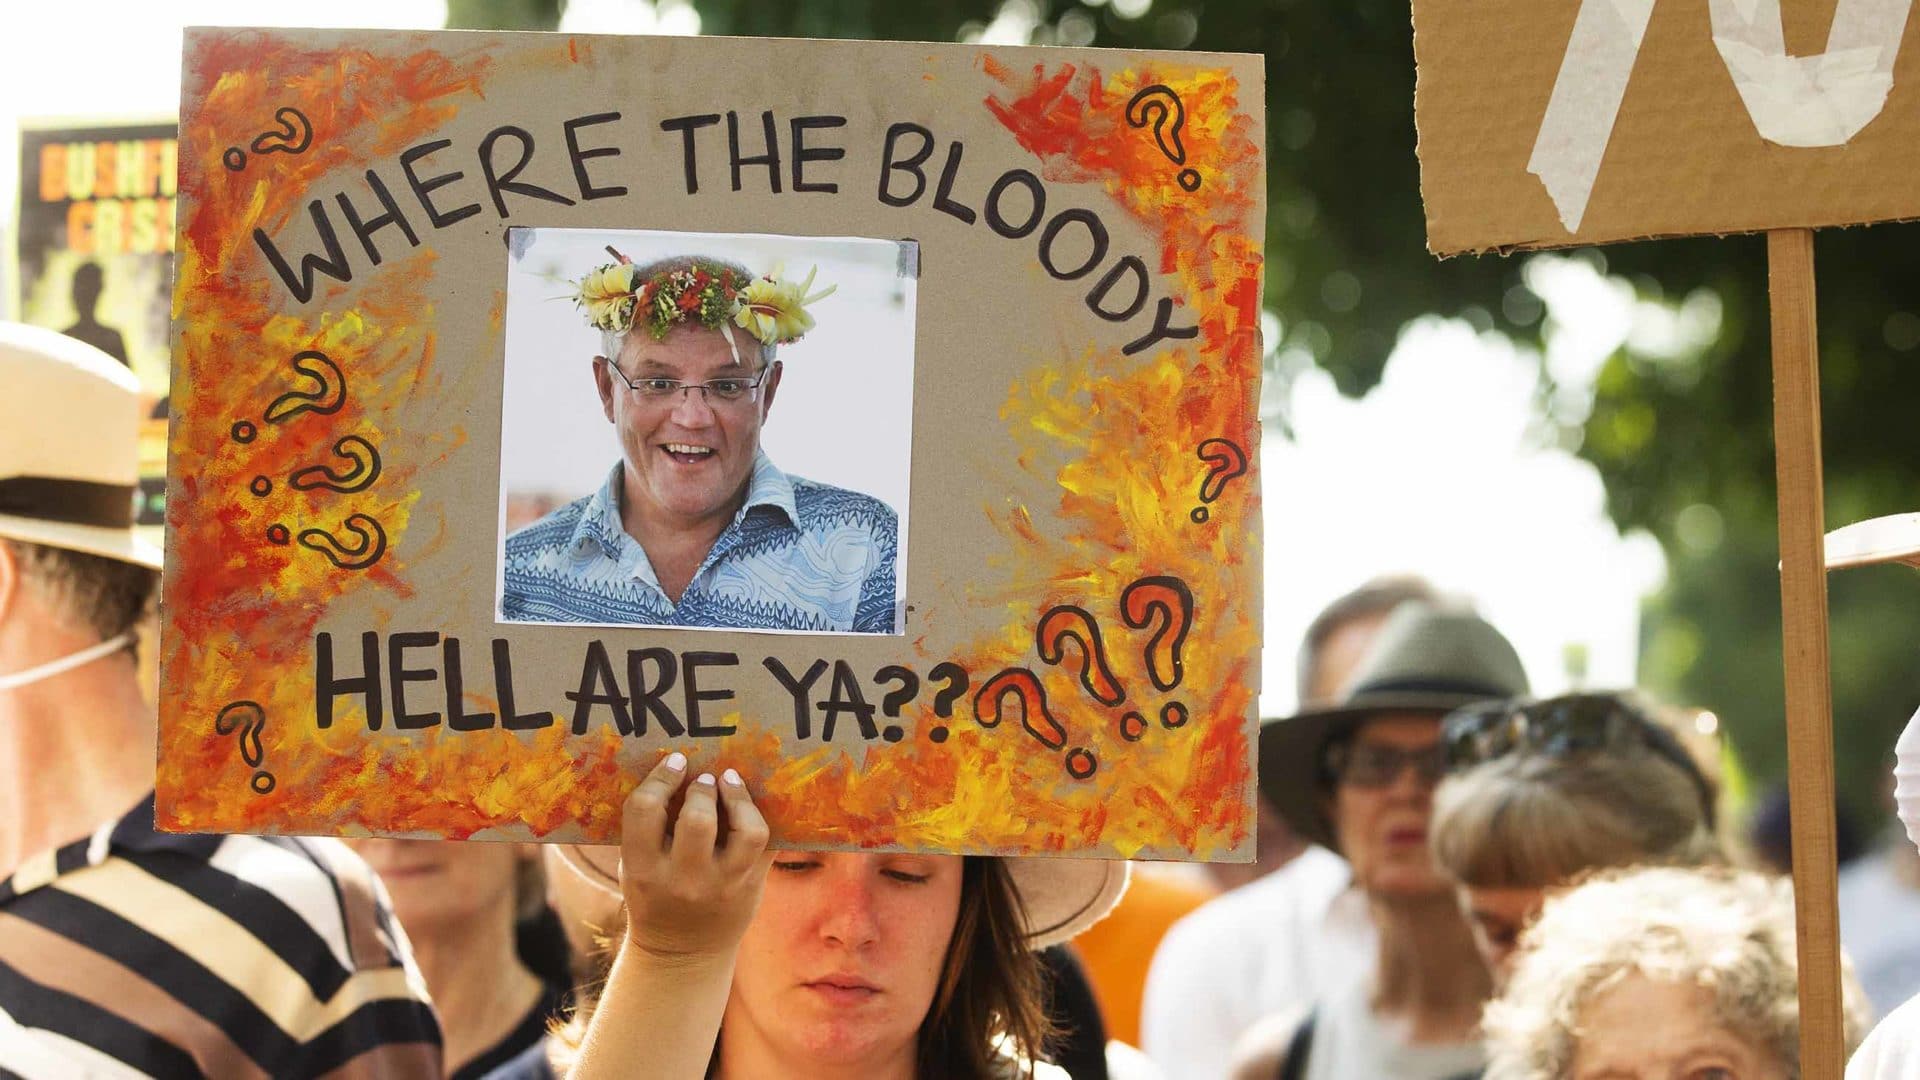 A protester holds up a banner scolding Prime Minister Scott Morrison during a December demonstration in Sydney, Australia.